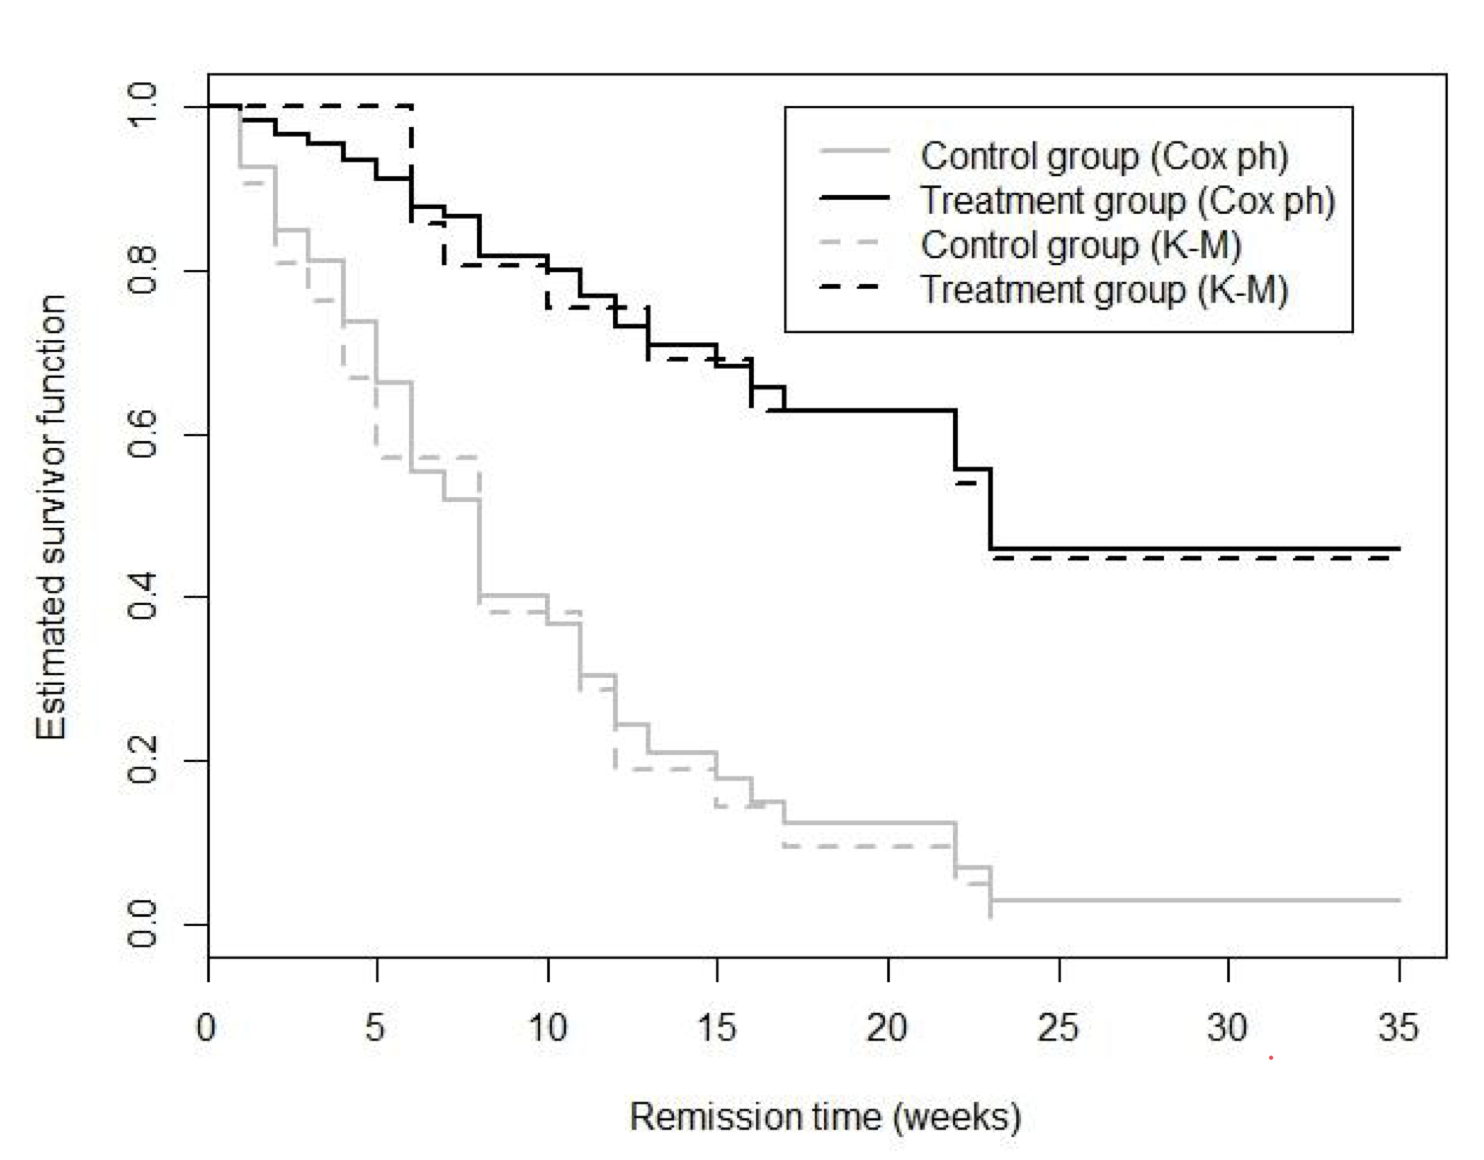 Leukaemia patient data: estimated survivor curves using the Cox proportional hazards model and using Kaplan-Meier.